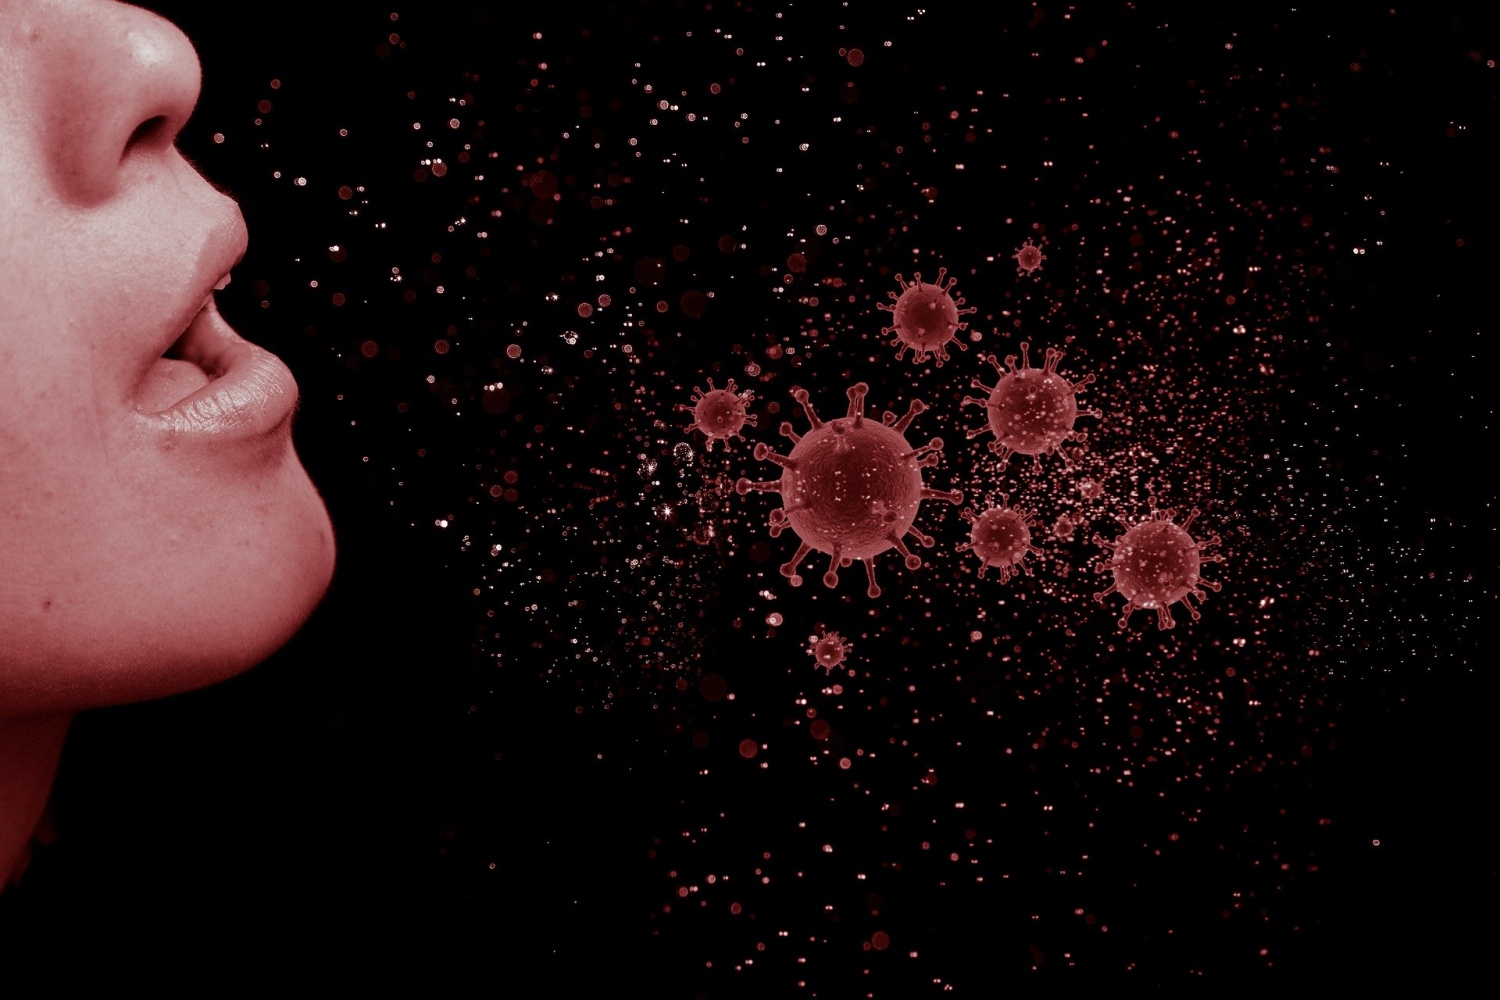 Social Distancing Ineffective? Coronavirus-Infected Sneeze Sprays Droplets Up to 27 FEET AWAY!